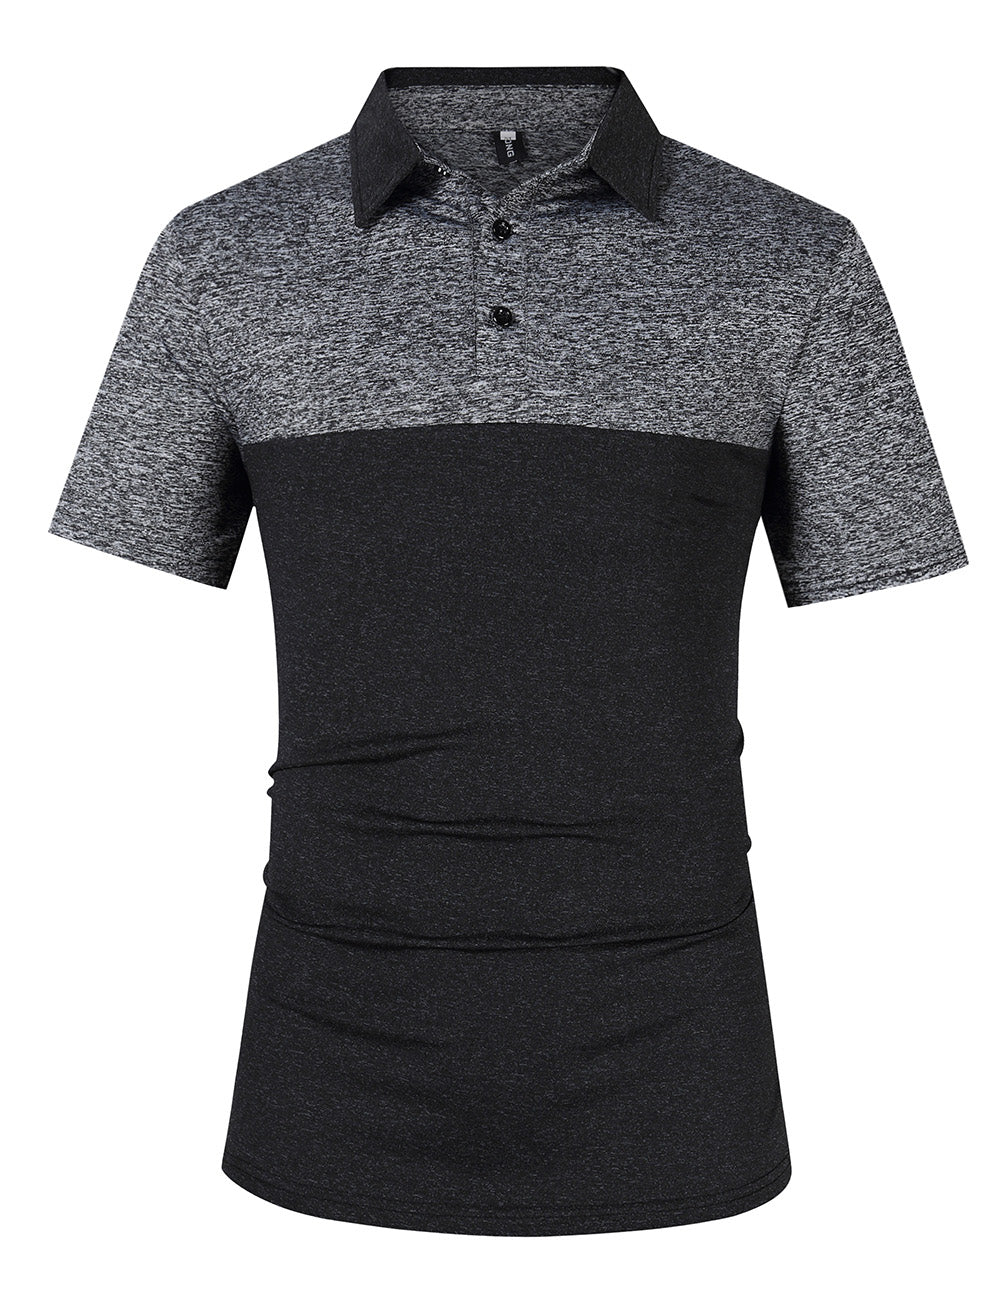 YESFASHION Men's Golf Short Sleeve Polo Panel Sports Shirt